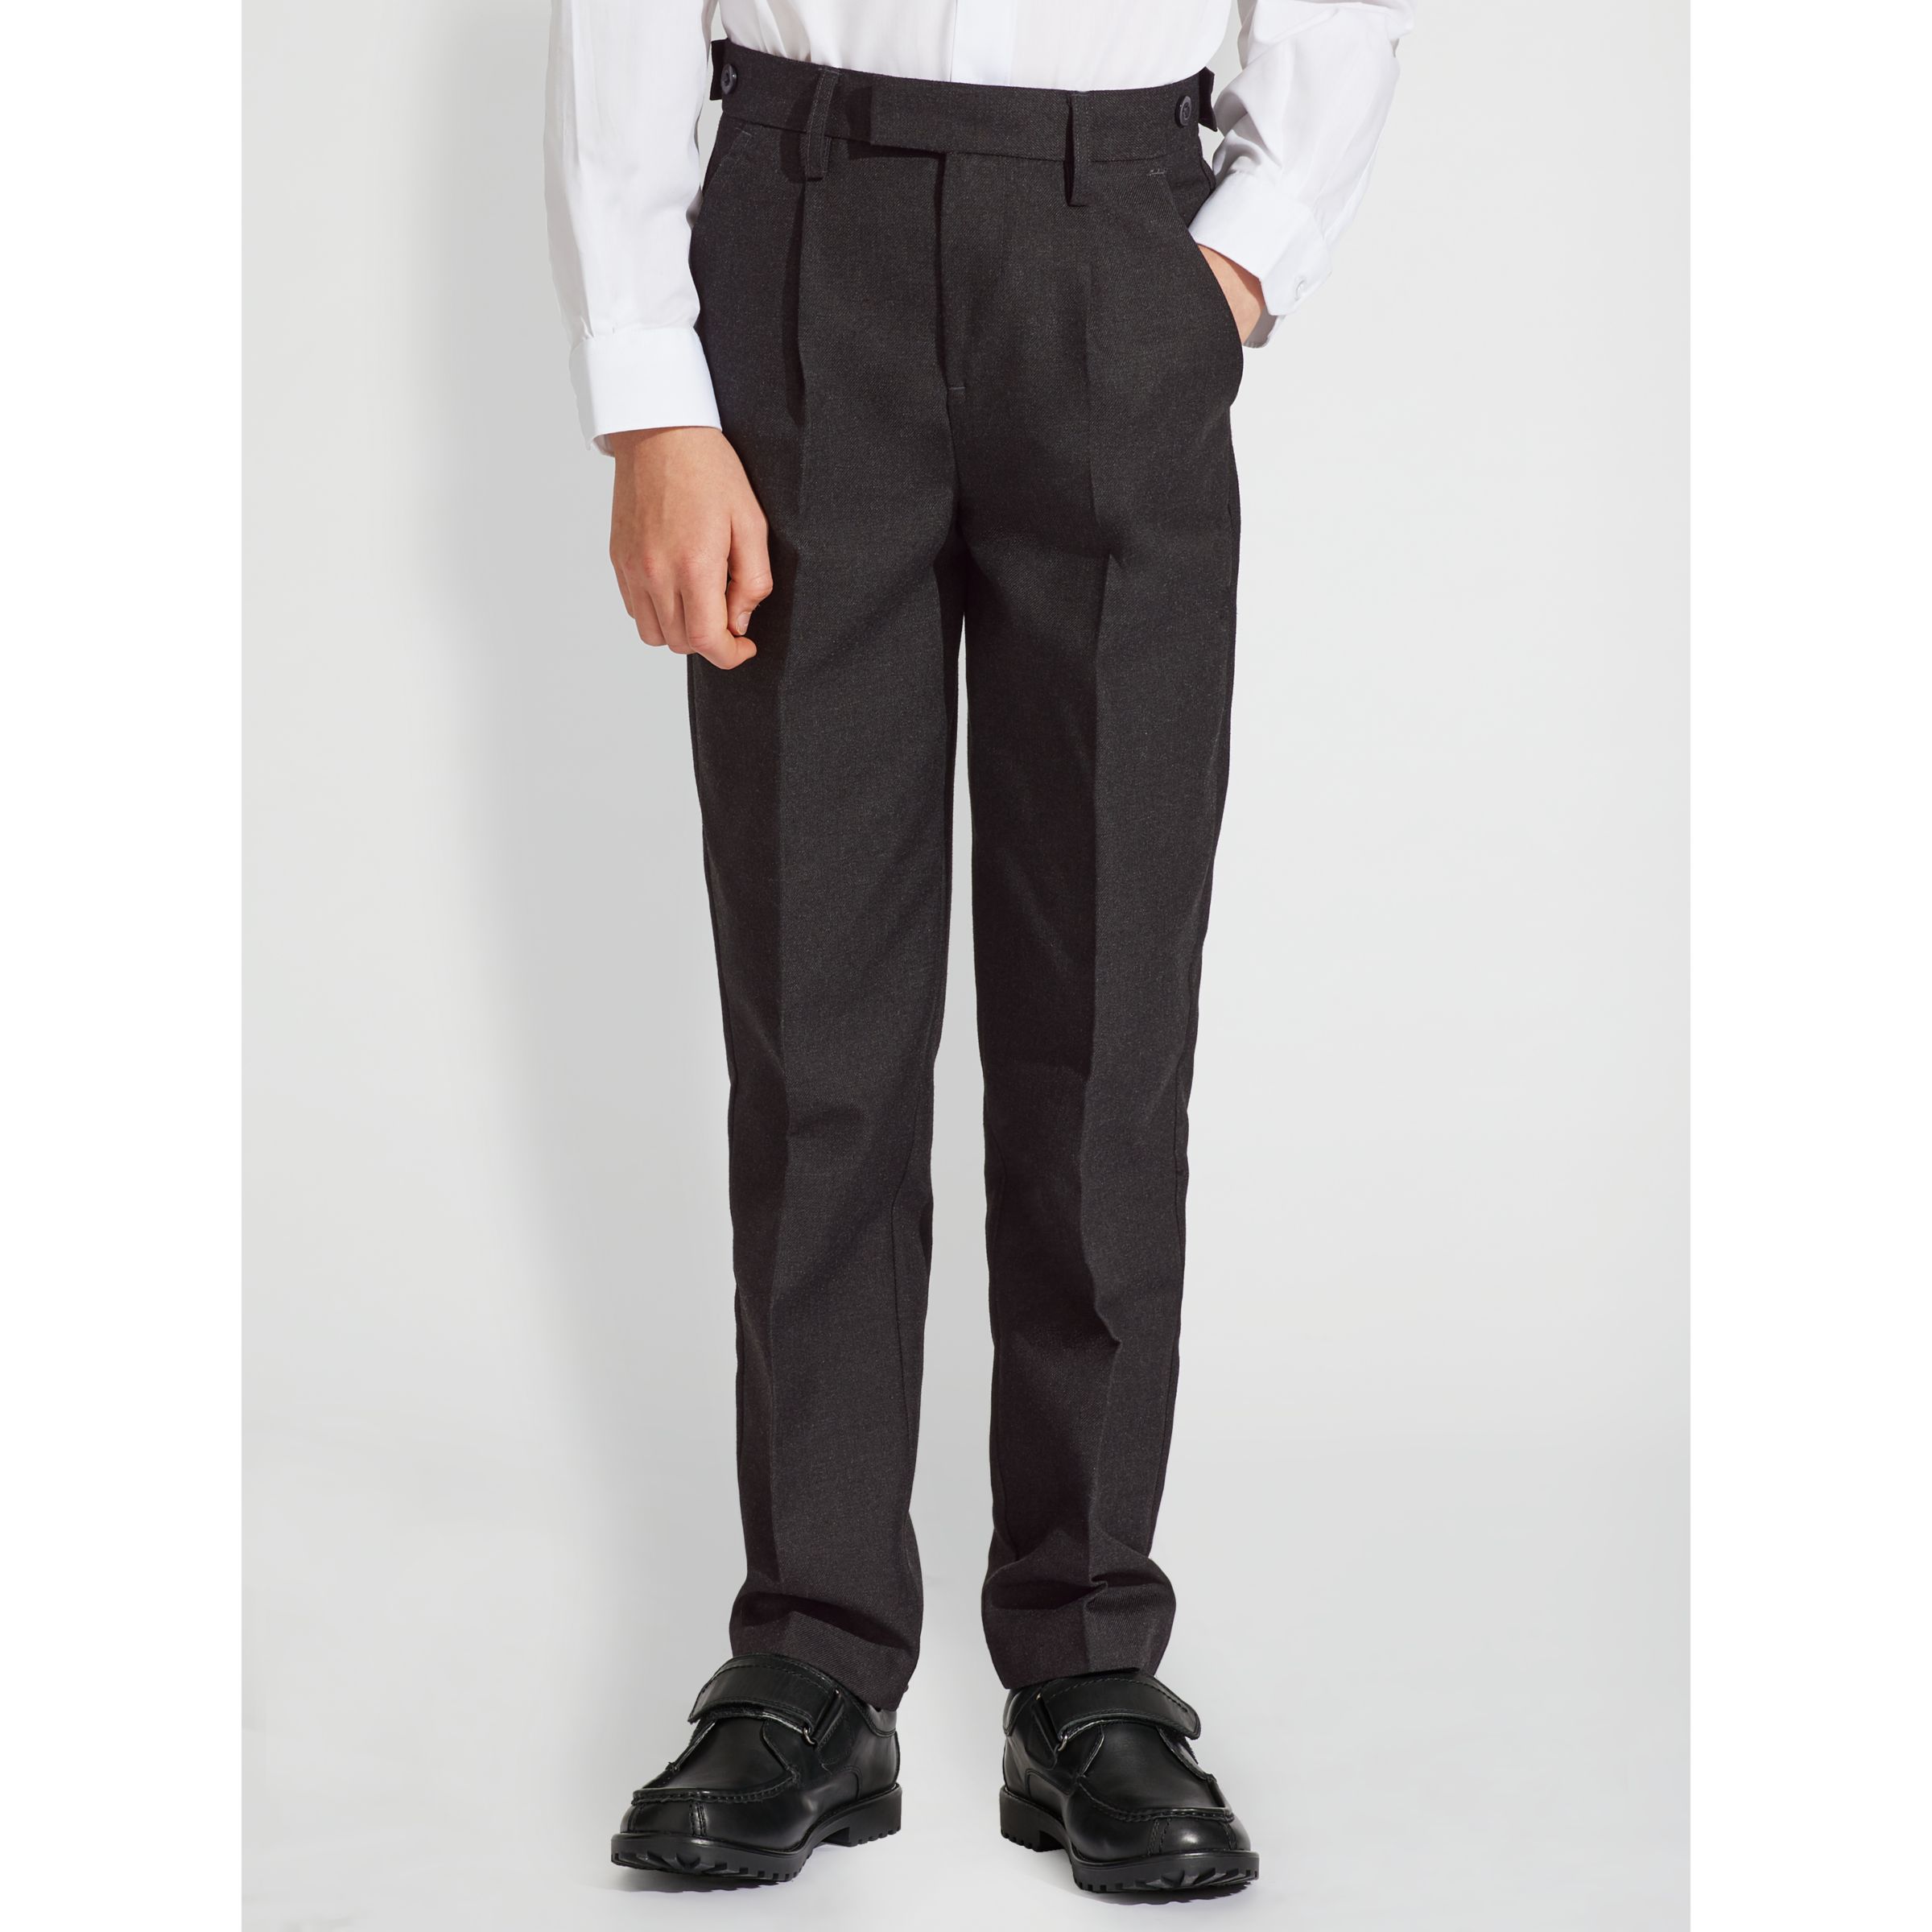 John Lewis & Partners Boys' Adjustable Waist Tailored Fit School Trousers